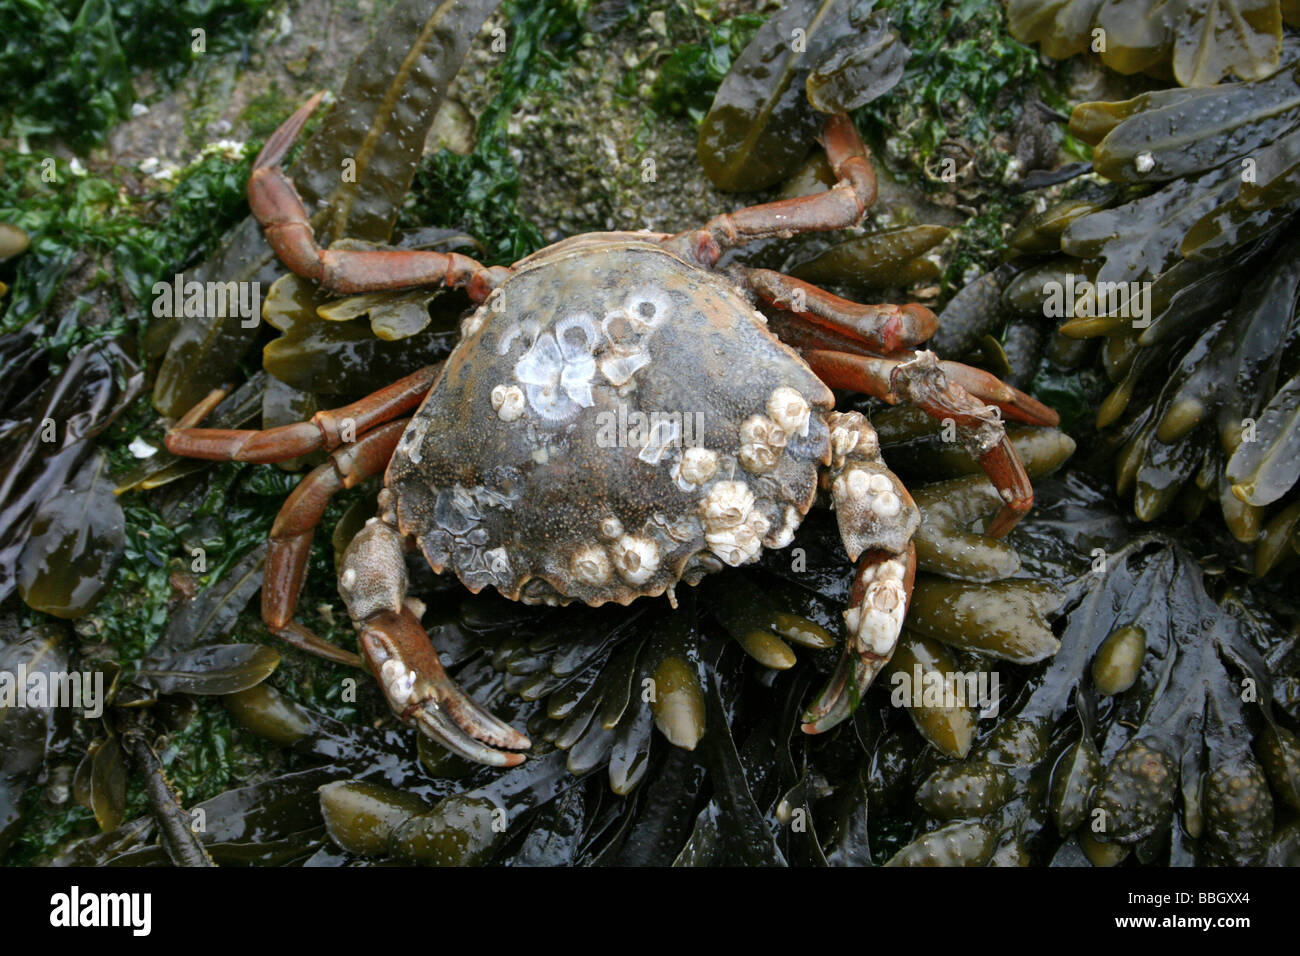 Crabe commun Carcinus maenas sur Spiral Fucus spiralis Rack Rock couvert prises à New Brighton, le Wirral, Merseyside, Royaume-Uni Banque D'Images